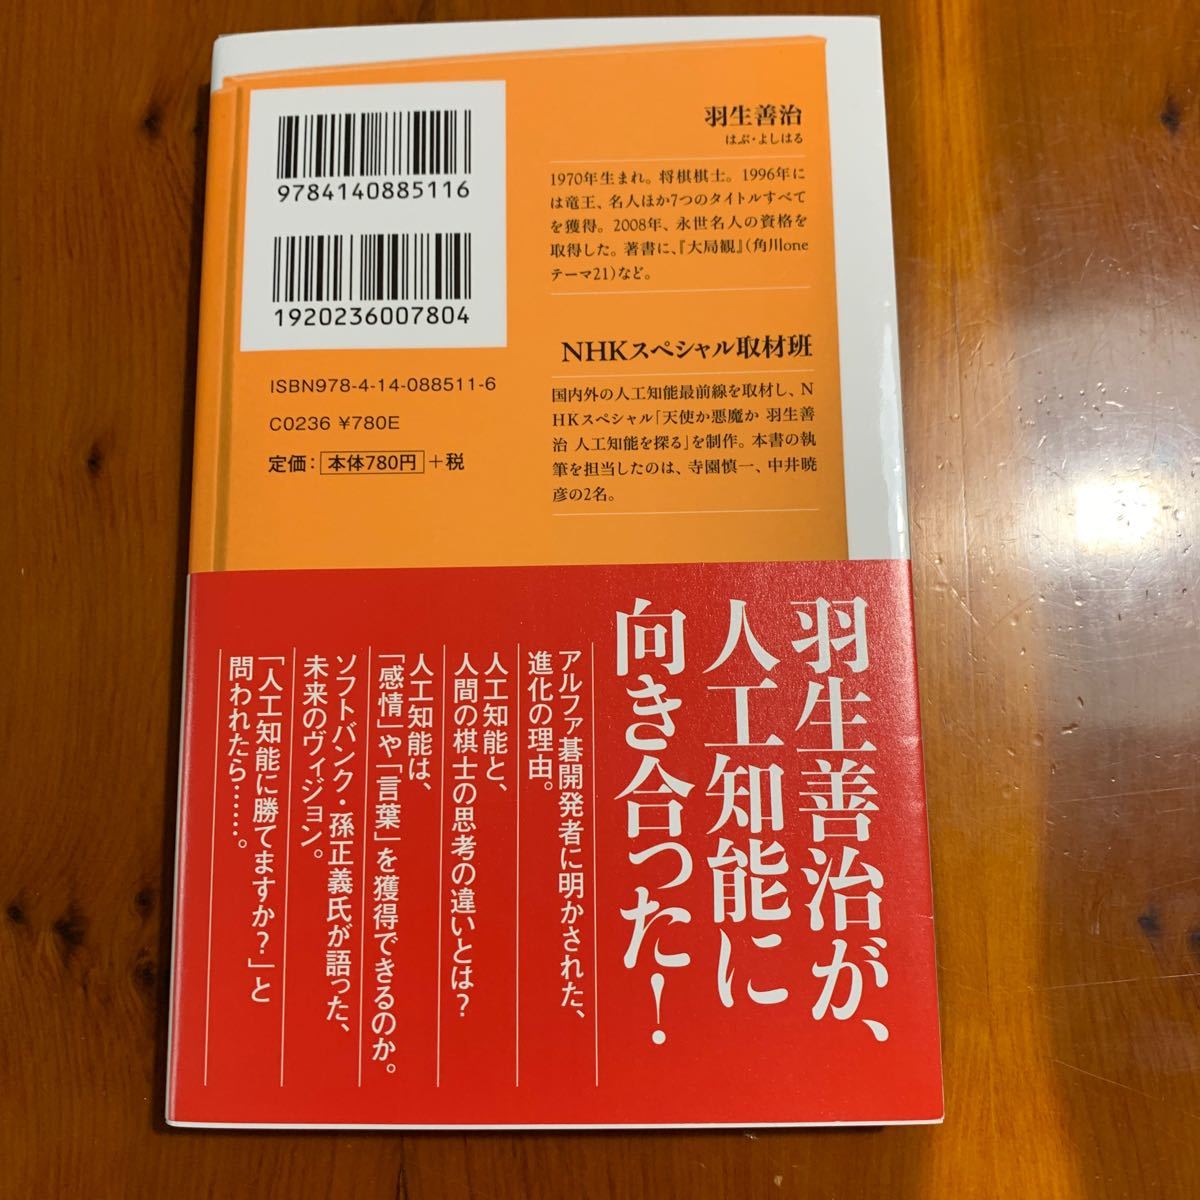 NHKスペシャル取材班による人工知能の核心に天才棋士、羽生善治が向き合った番組の本 